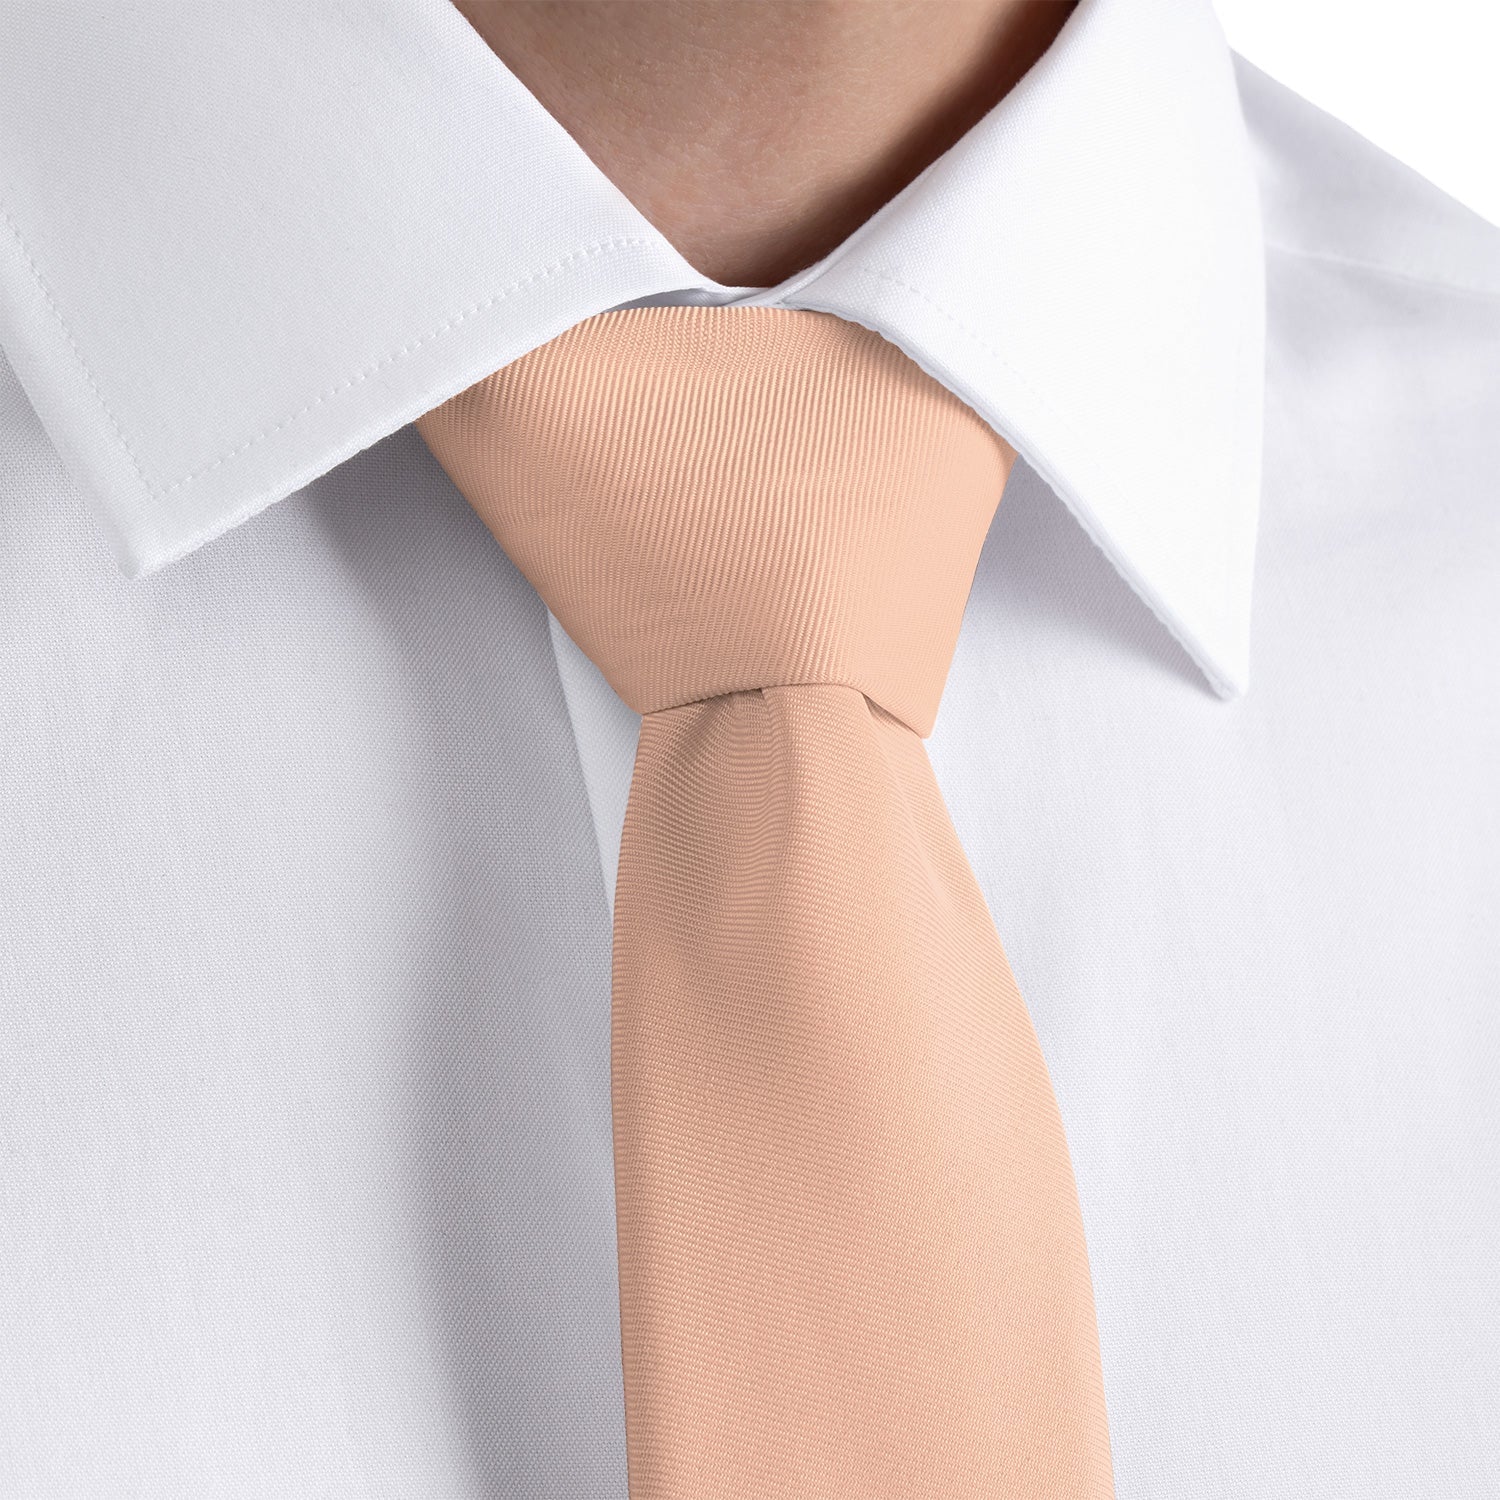 Solid KT Peach Necktie - Rolled - Knotty Tie Co.